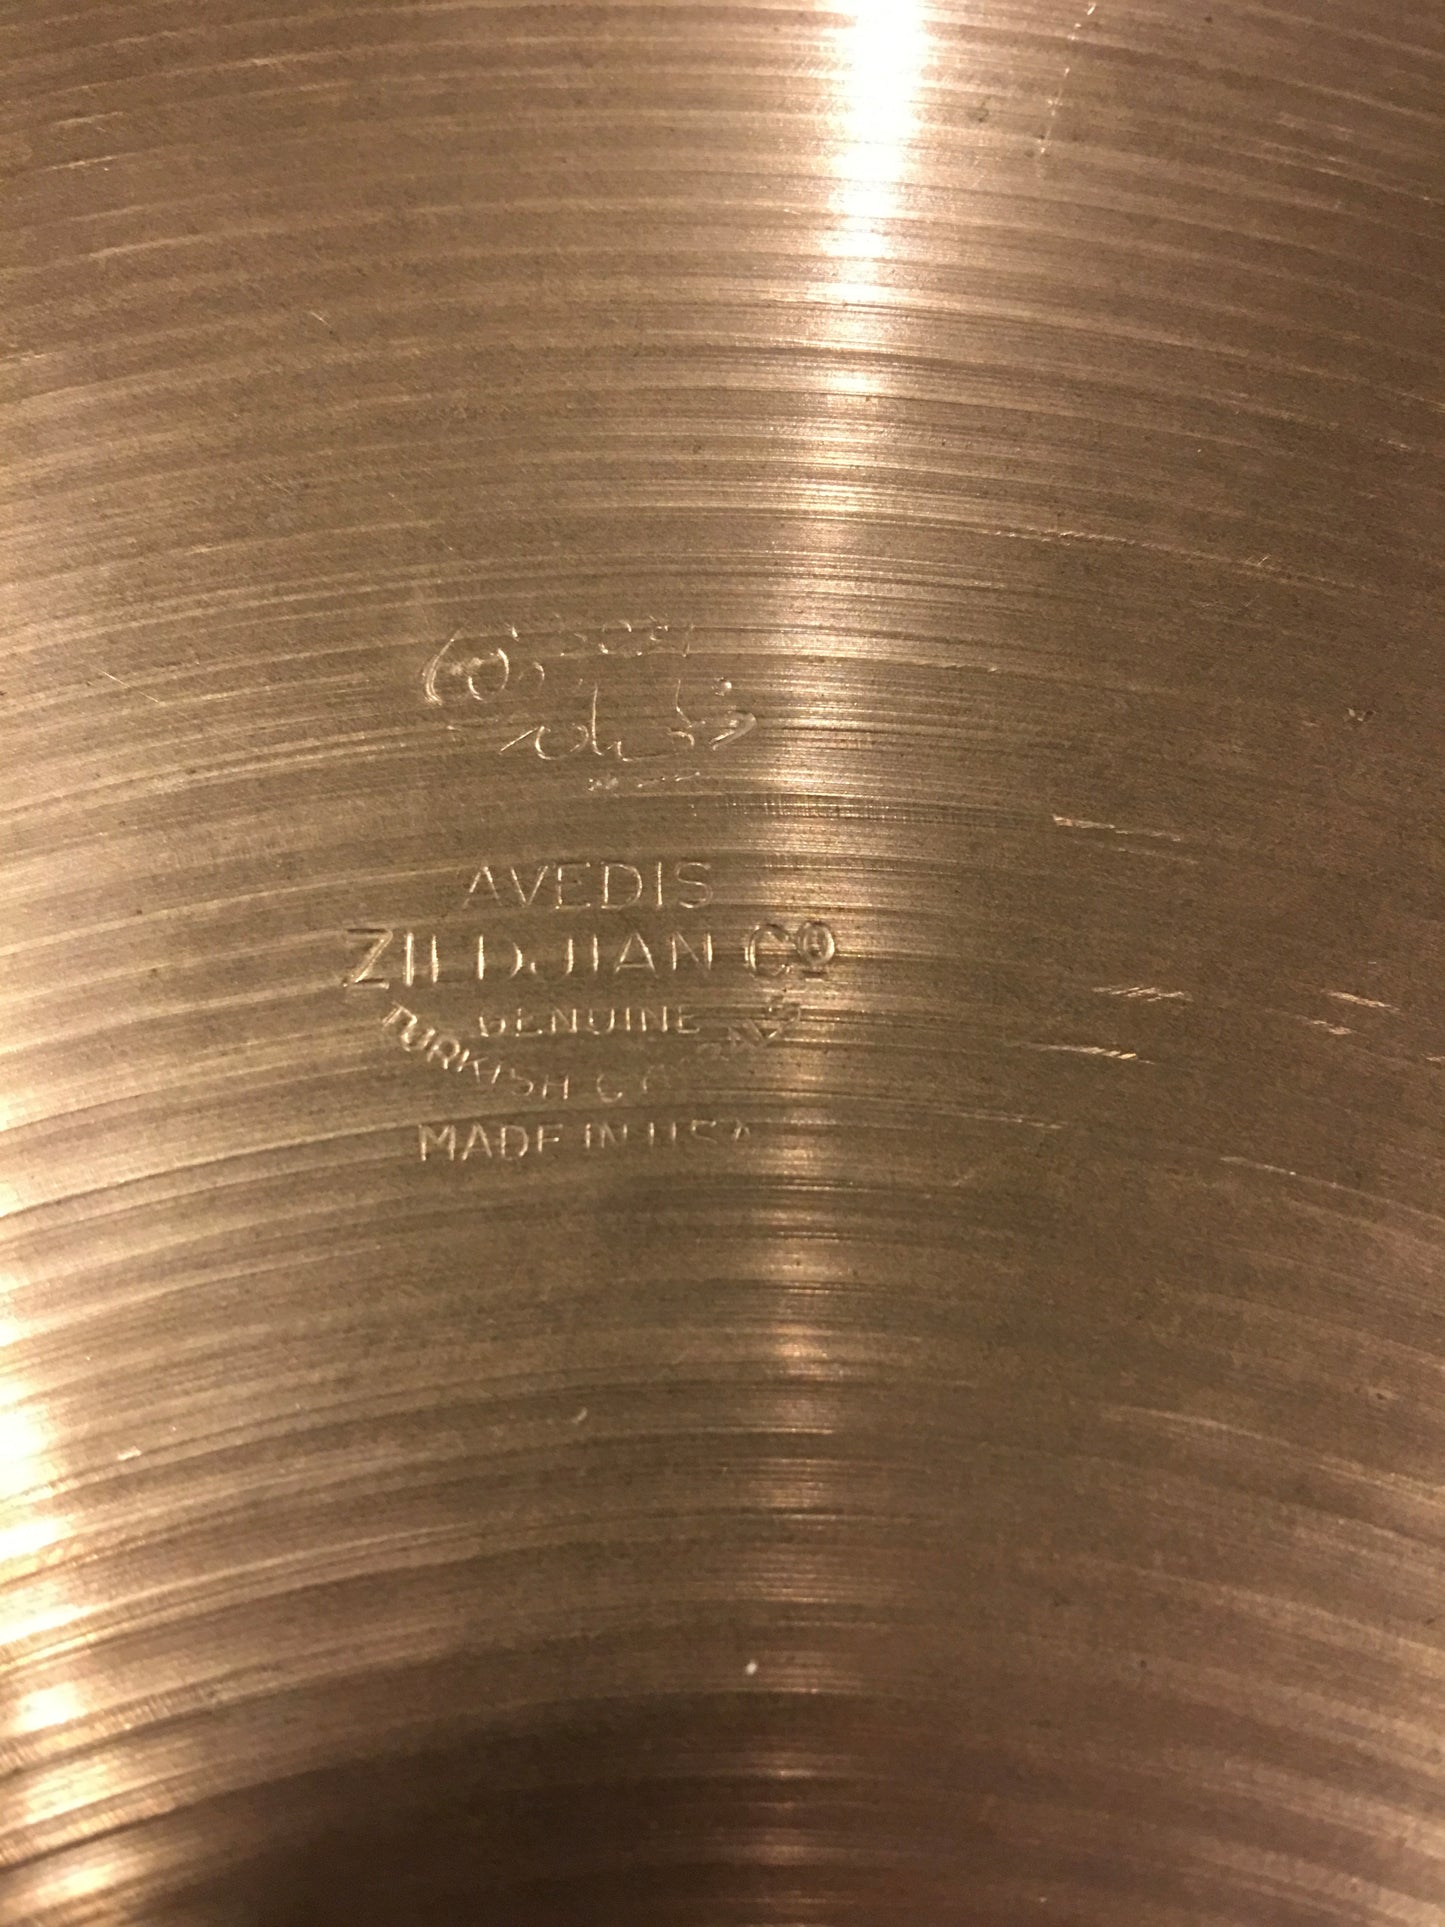 15" Zildjian A Trans Stamp Hi Hat Cymbals 1018/1414g #425